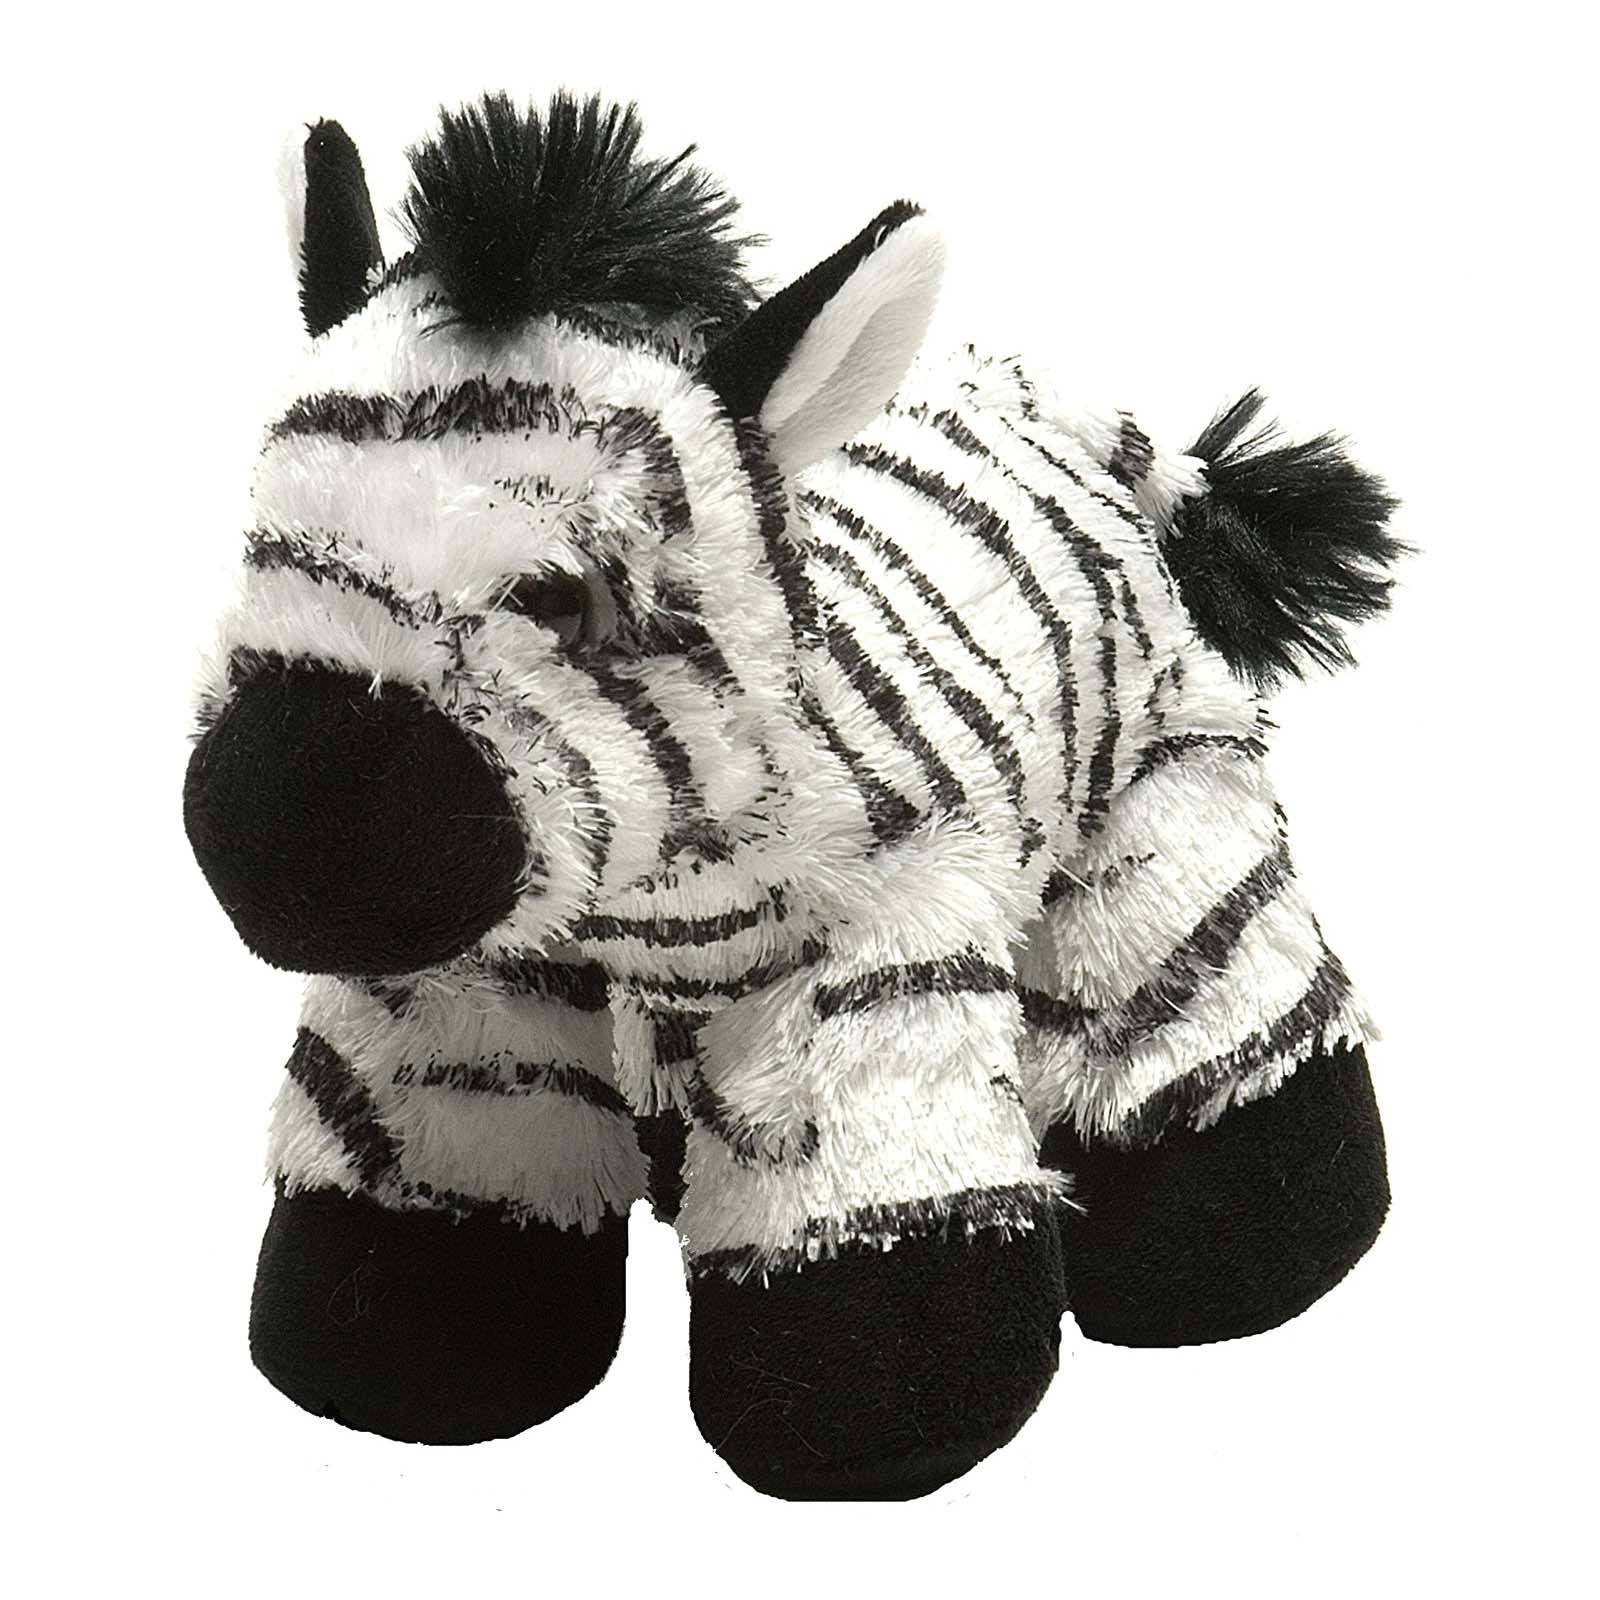 zebra stuffed animal